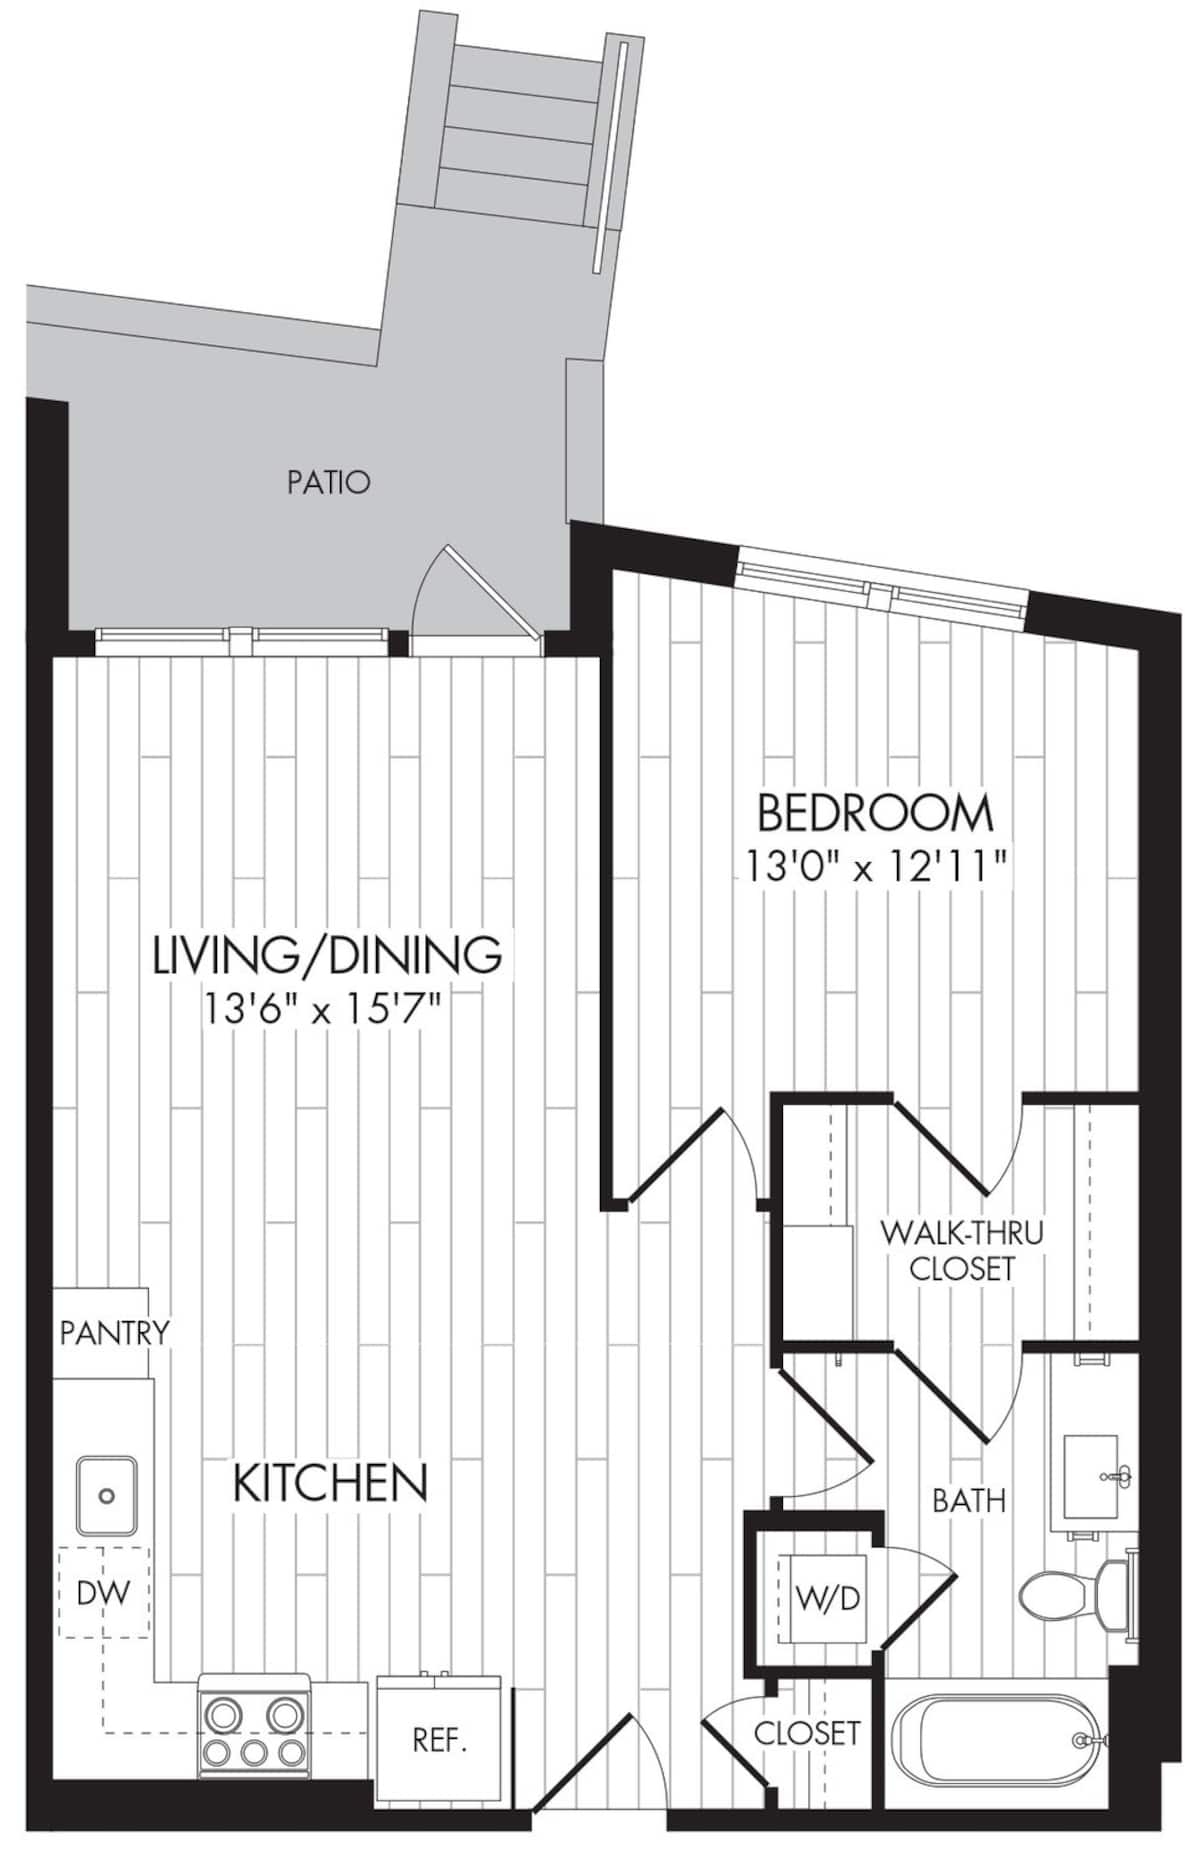 Floorplan diagram for 1G, showing 1 bedroom